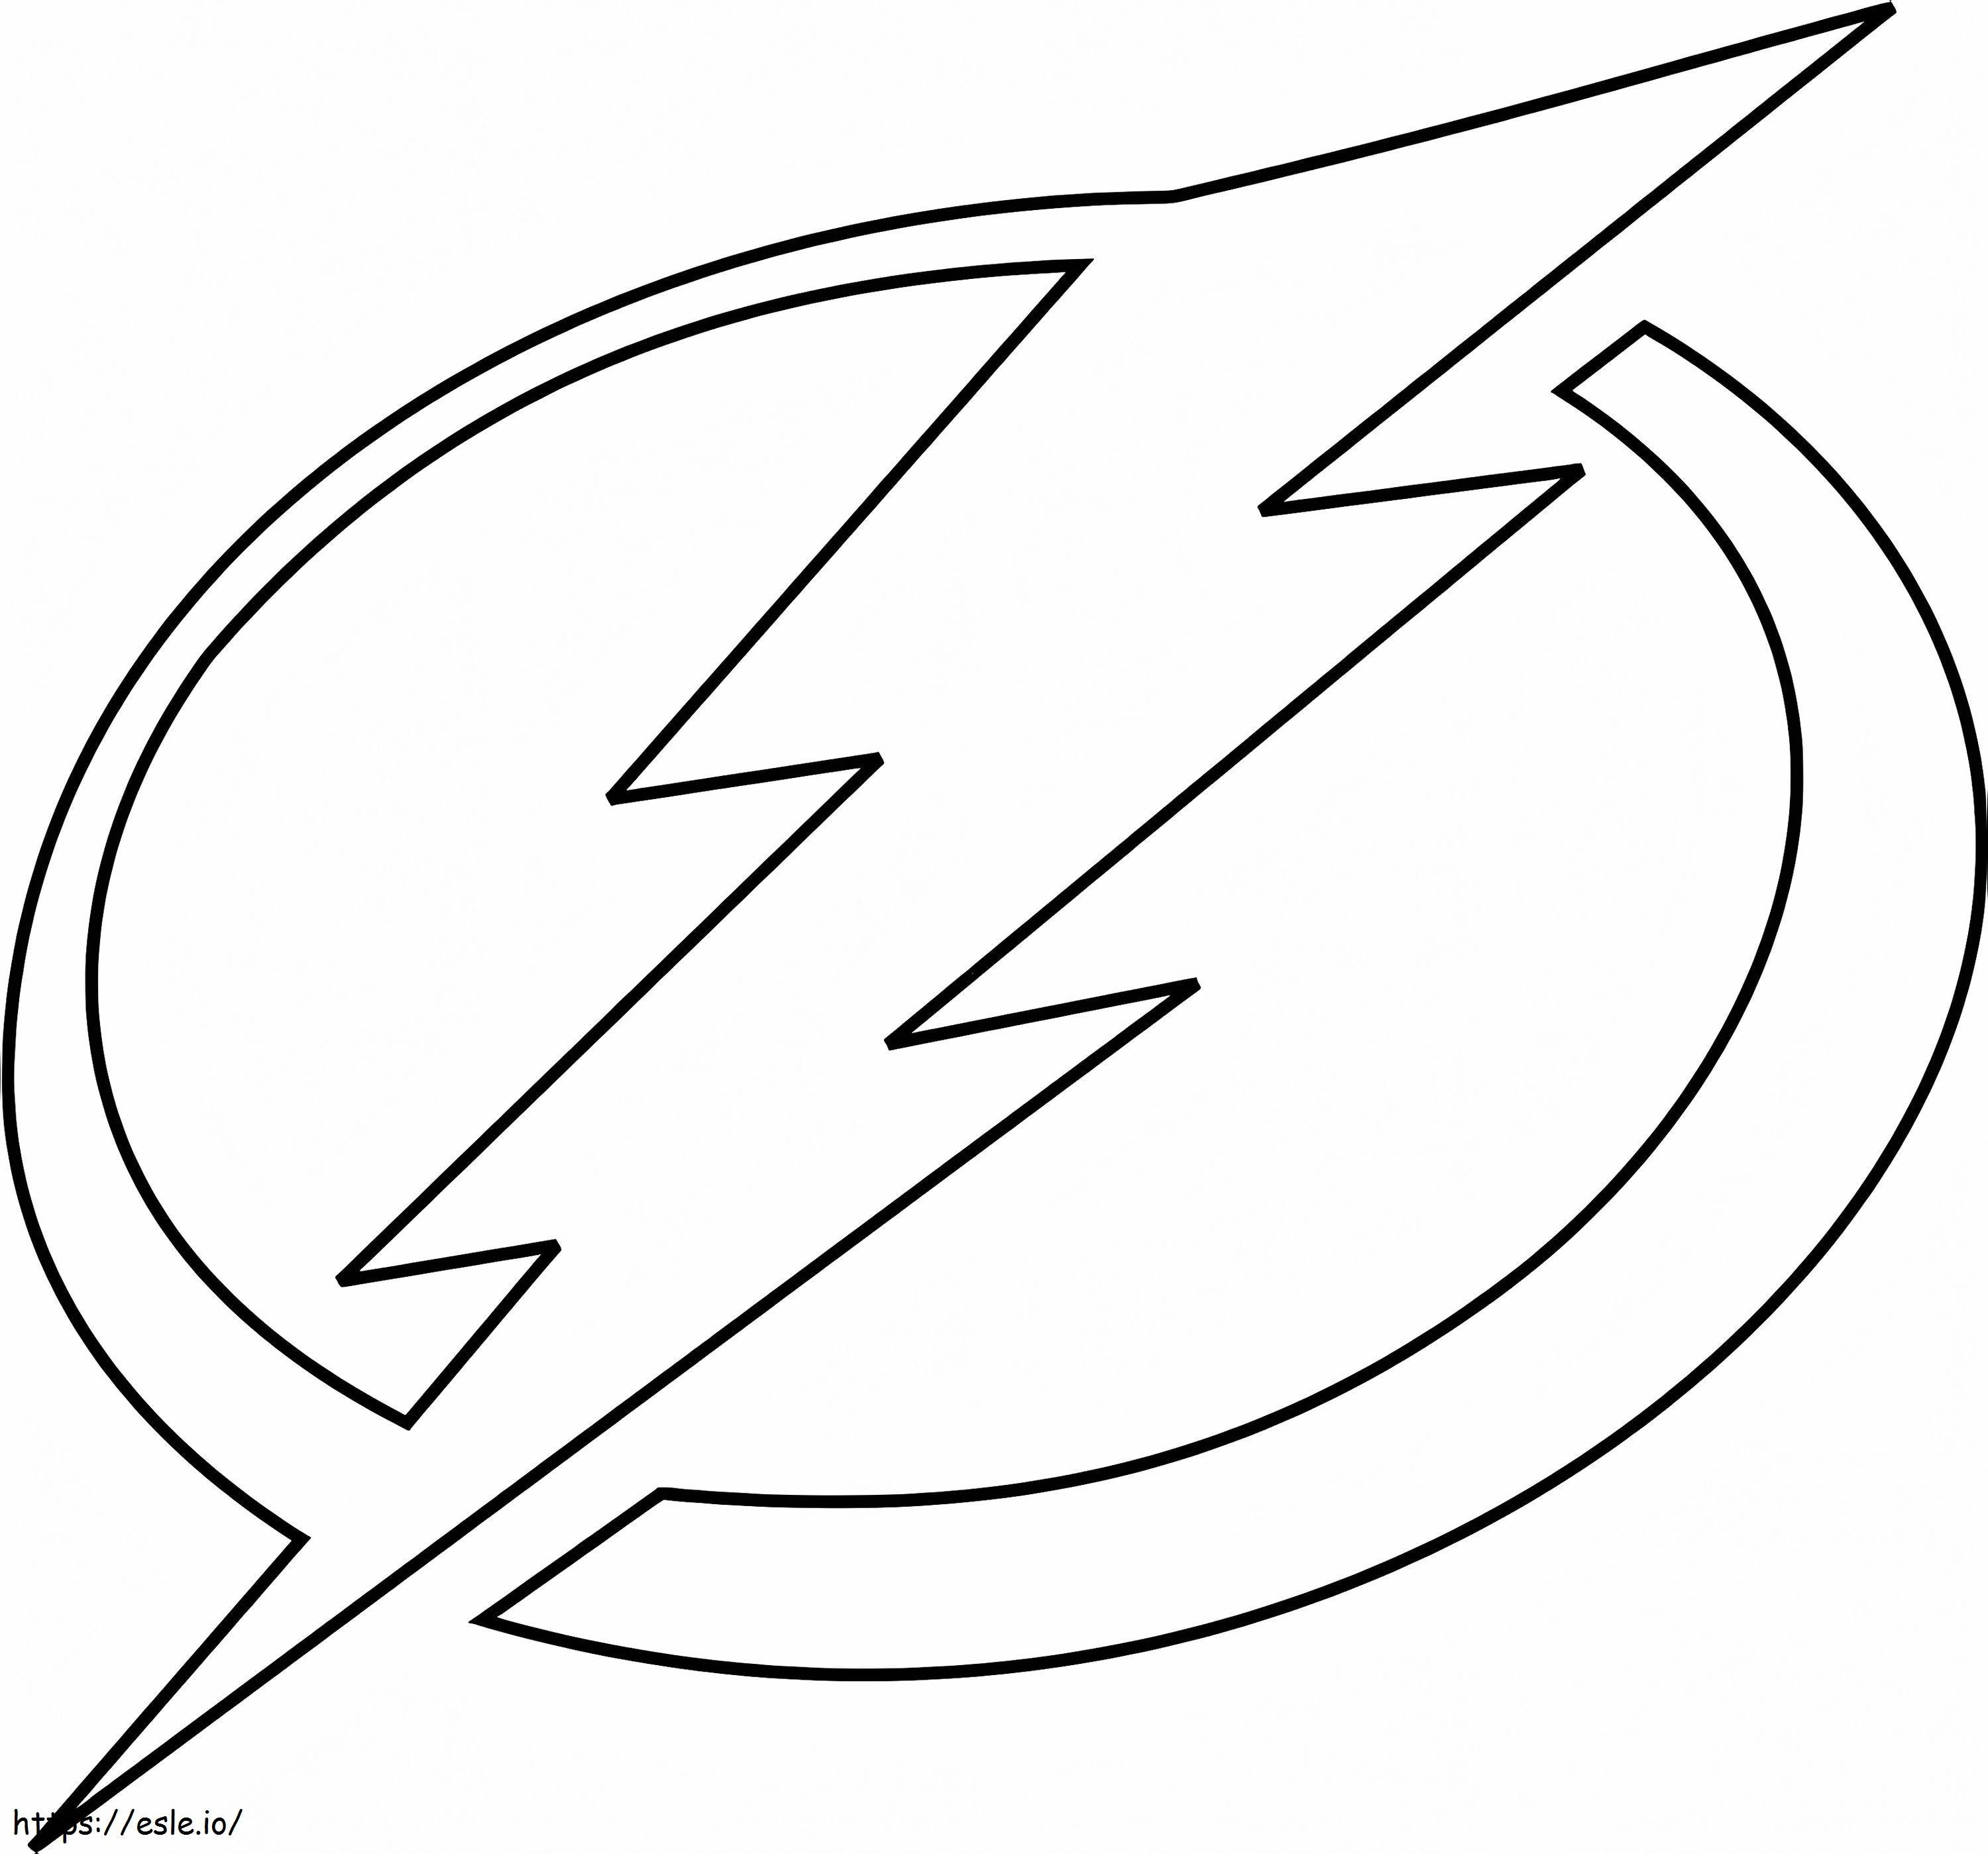 Tampa Bay Lightning-Logo ausmalbilder